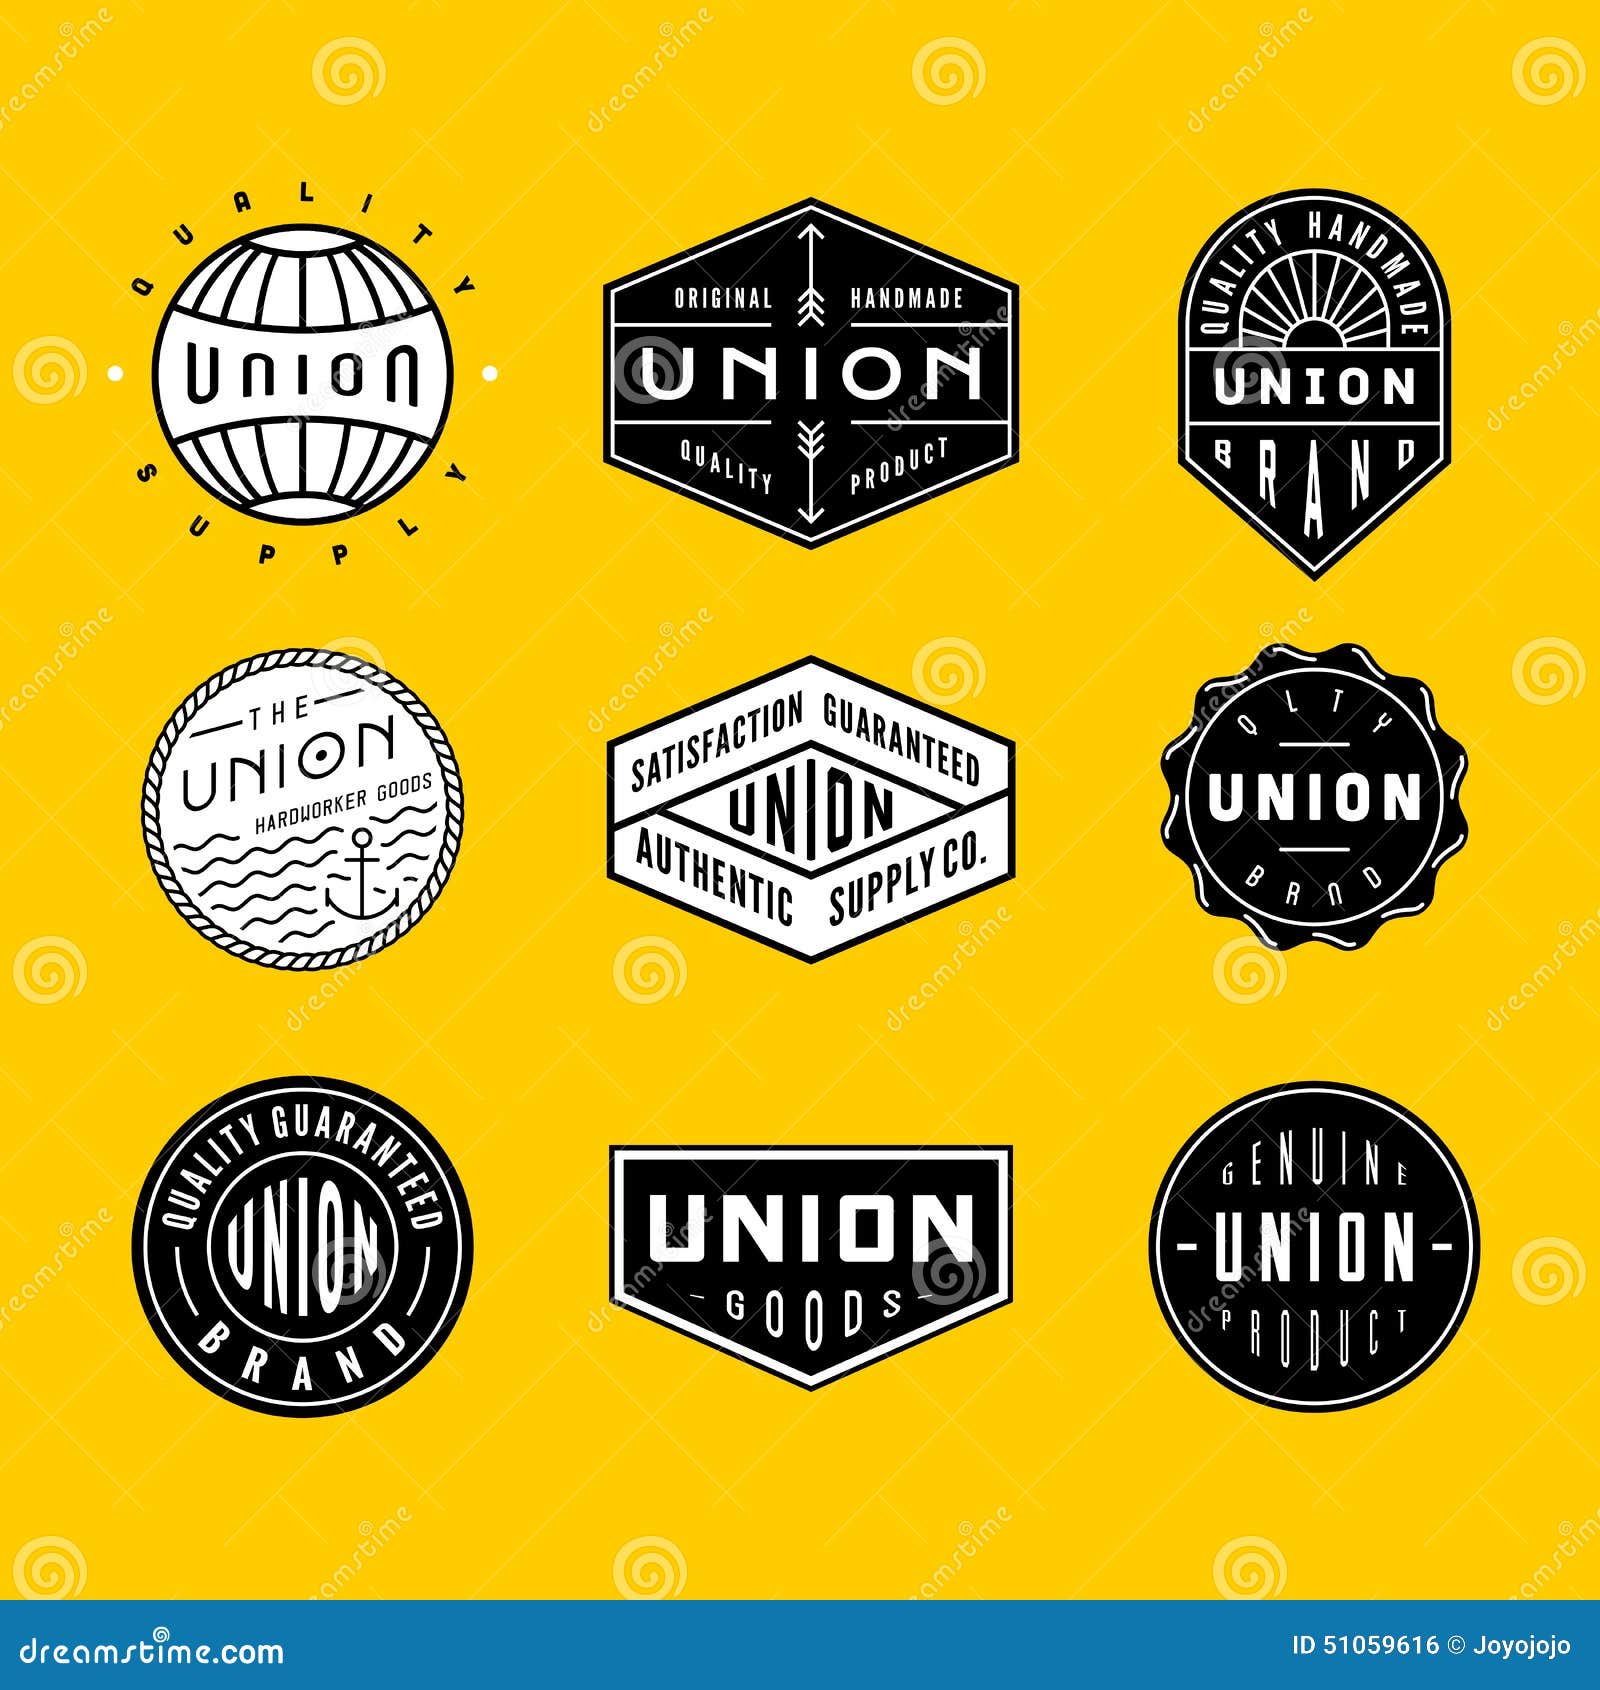 vintage logos & badges 2